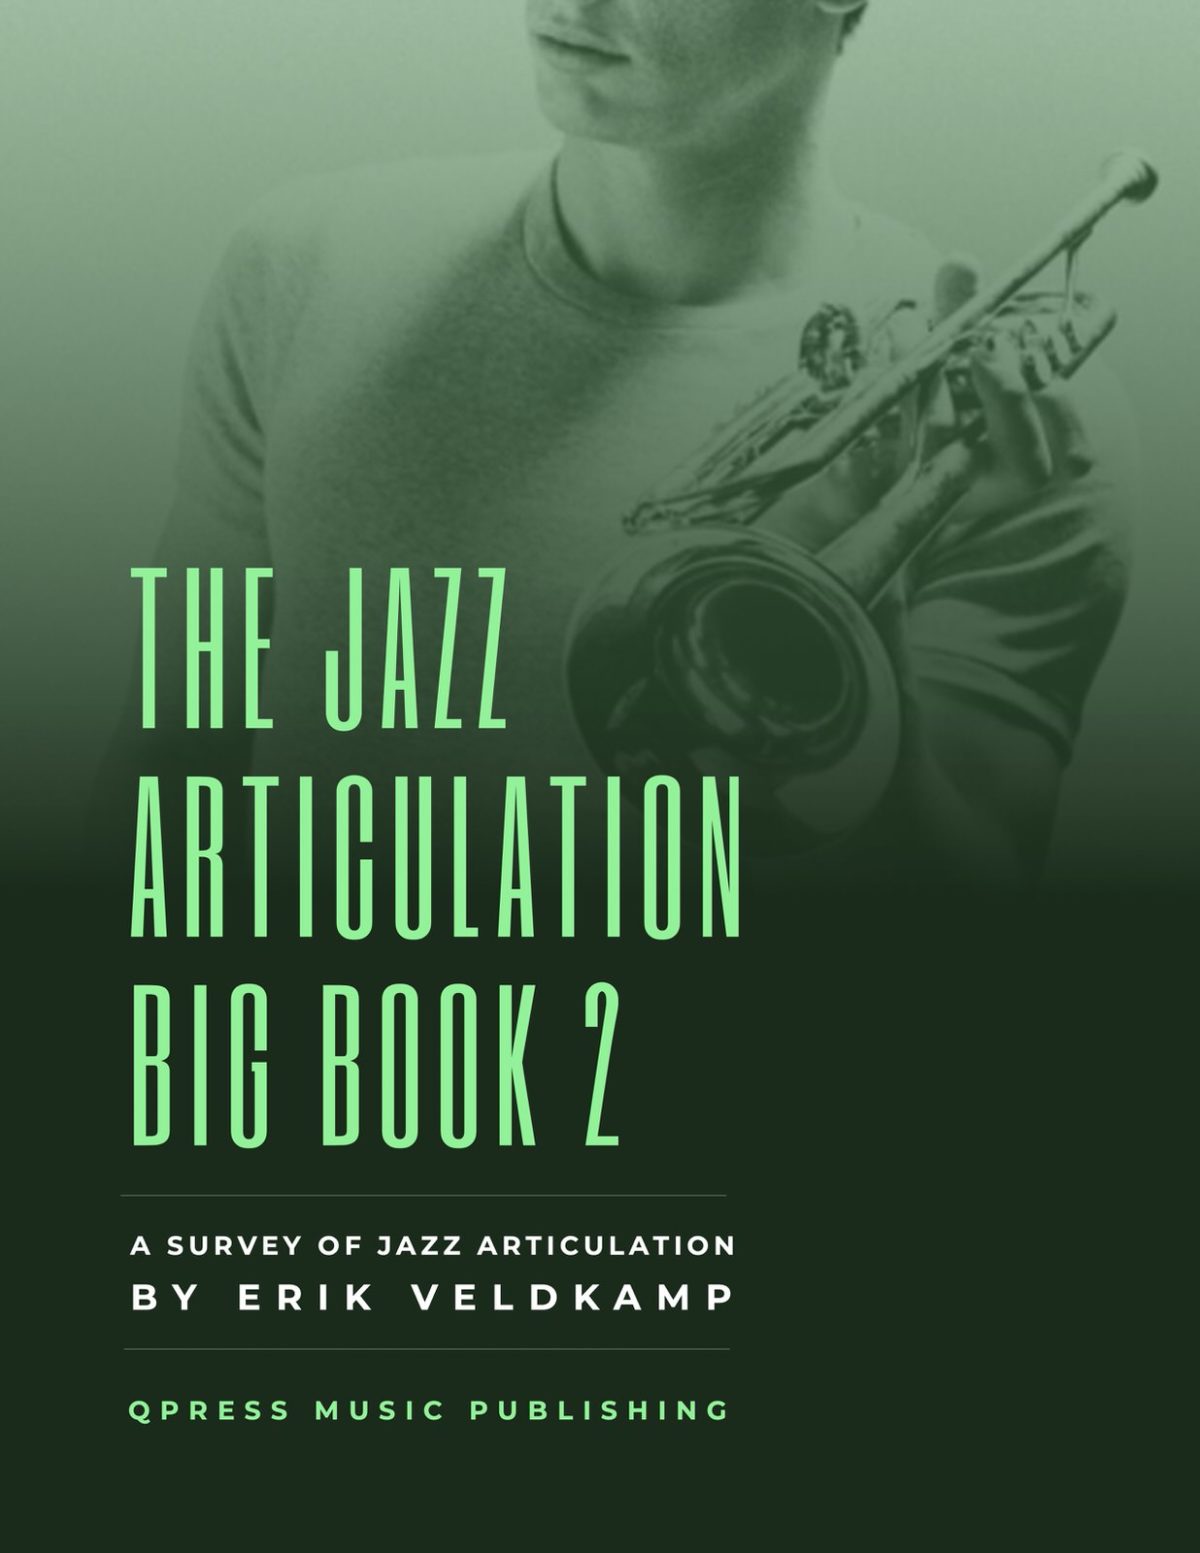 Veldkamp, Jazz Articulation Big Book 2-p001